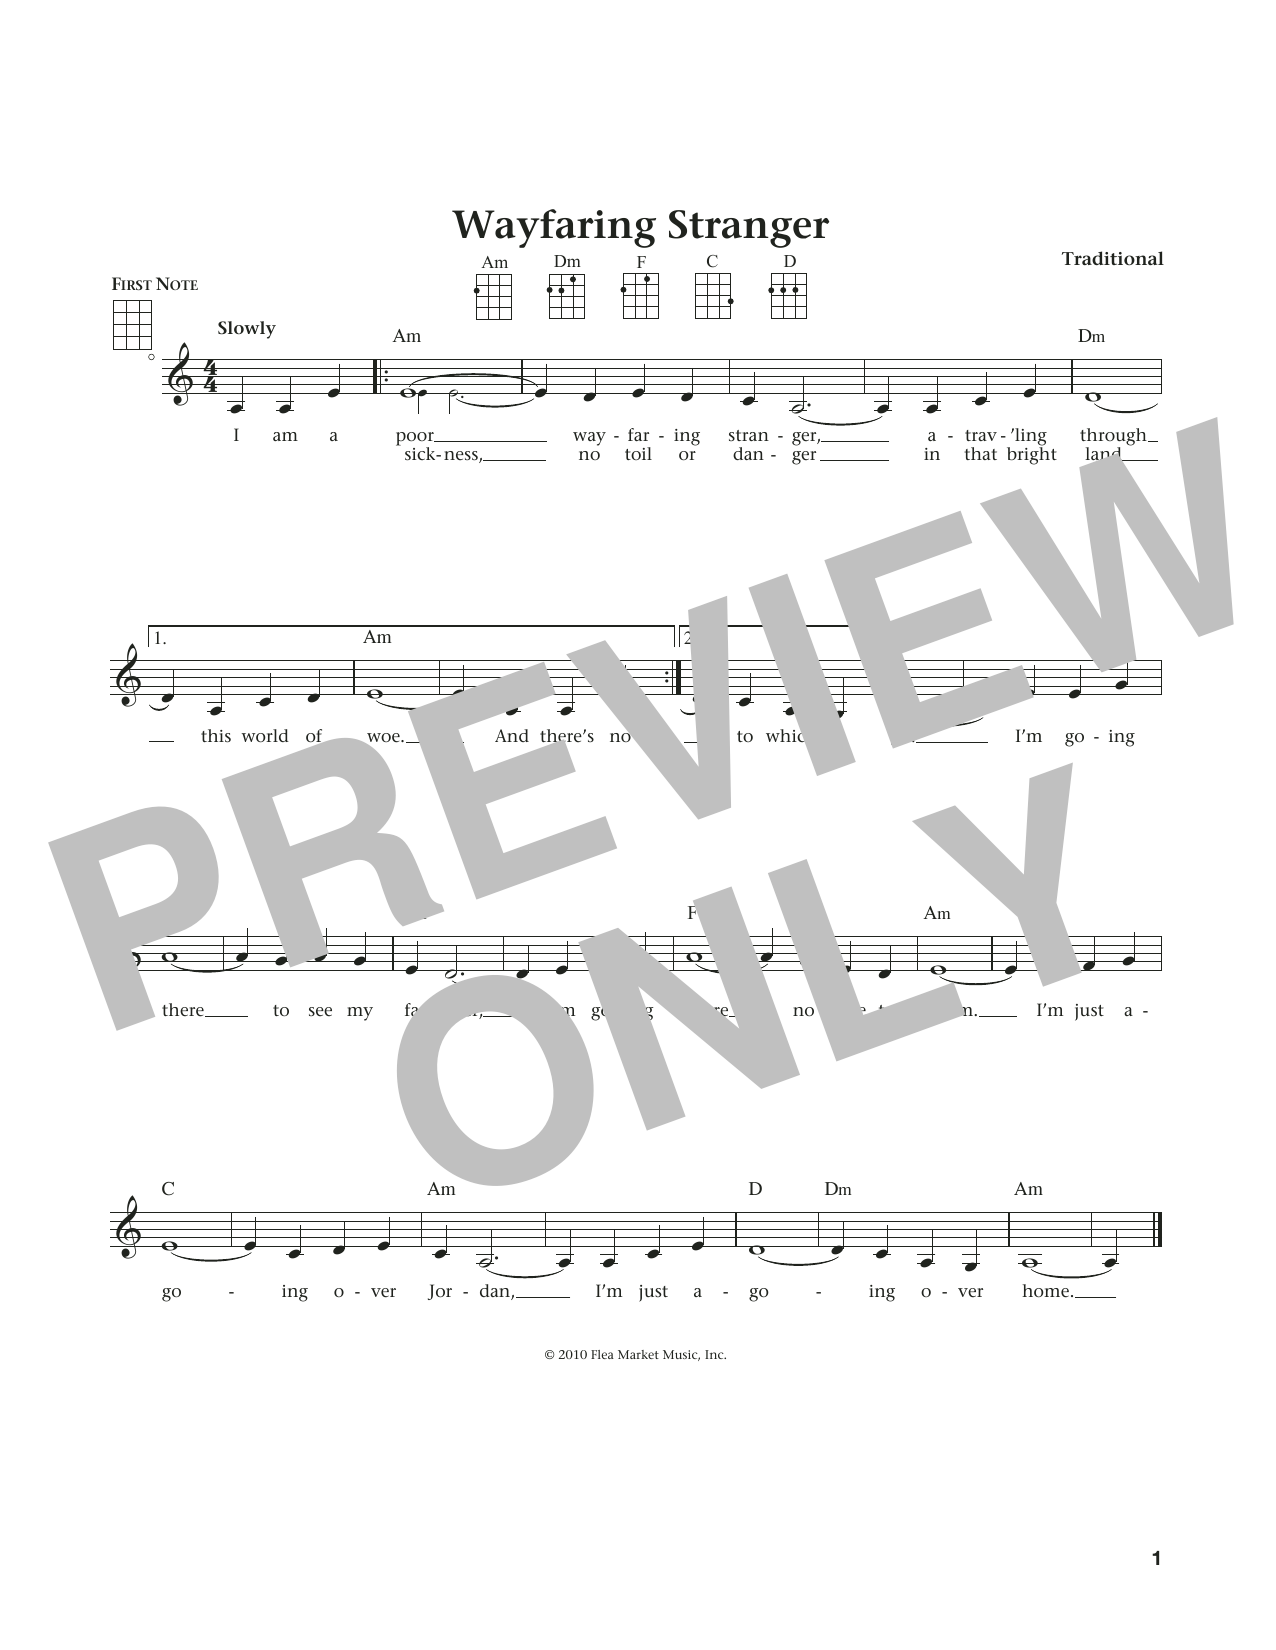 Southern American Folk Hymn Wayfaring Stranger (from The Daily Ukulele) (arr. Liz and Jim Beloff) Sheet Music Notes & Chords for Ukulele - Download or Print PDF